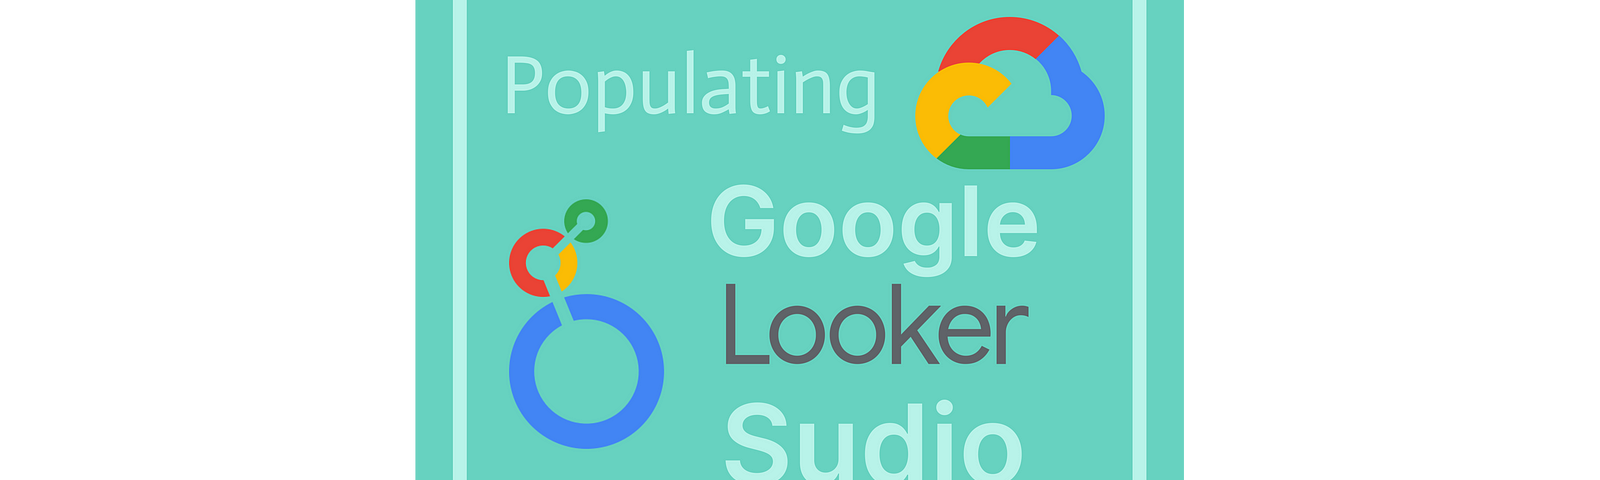 Populating Google Looker Studio with Data. Self-made image.